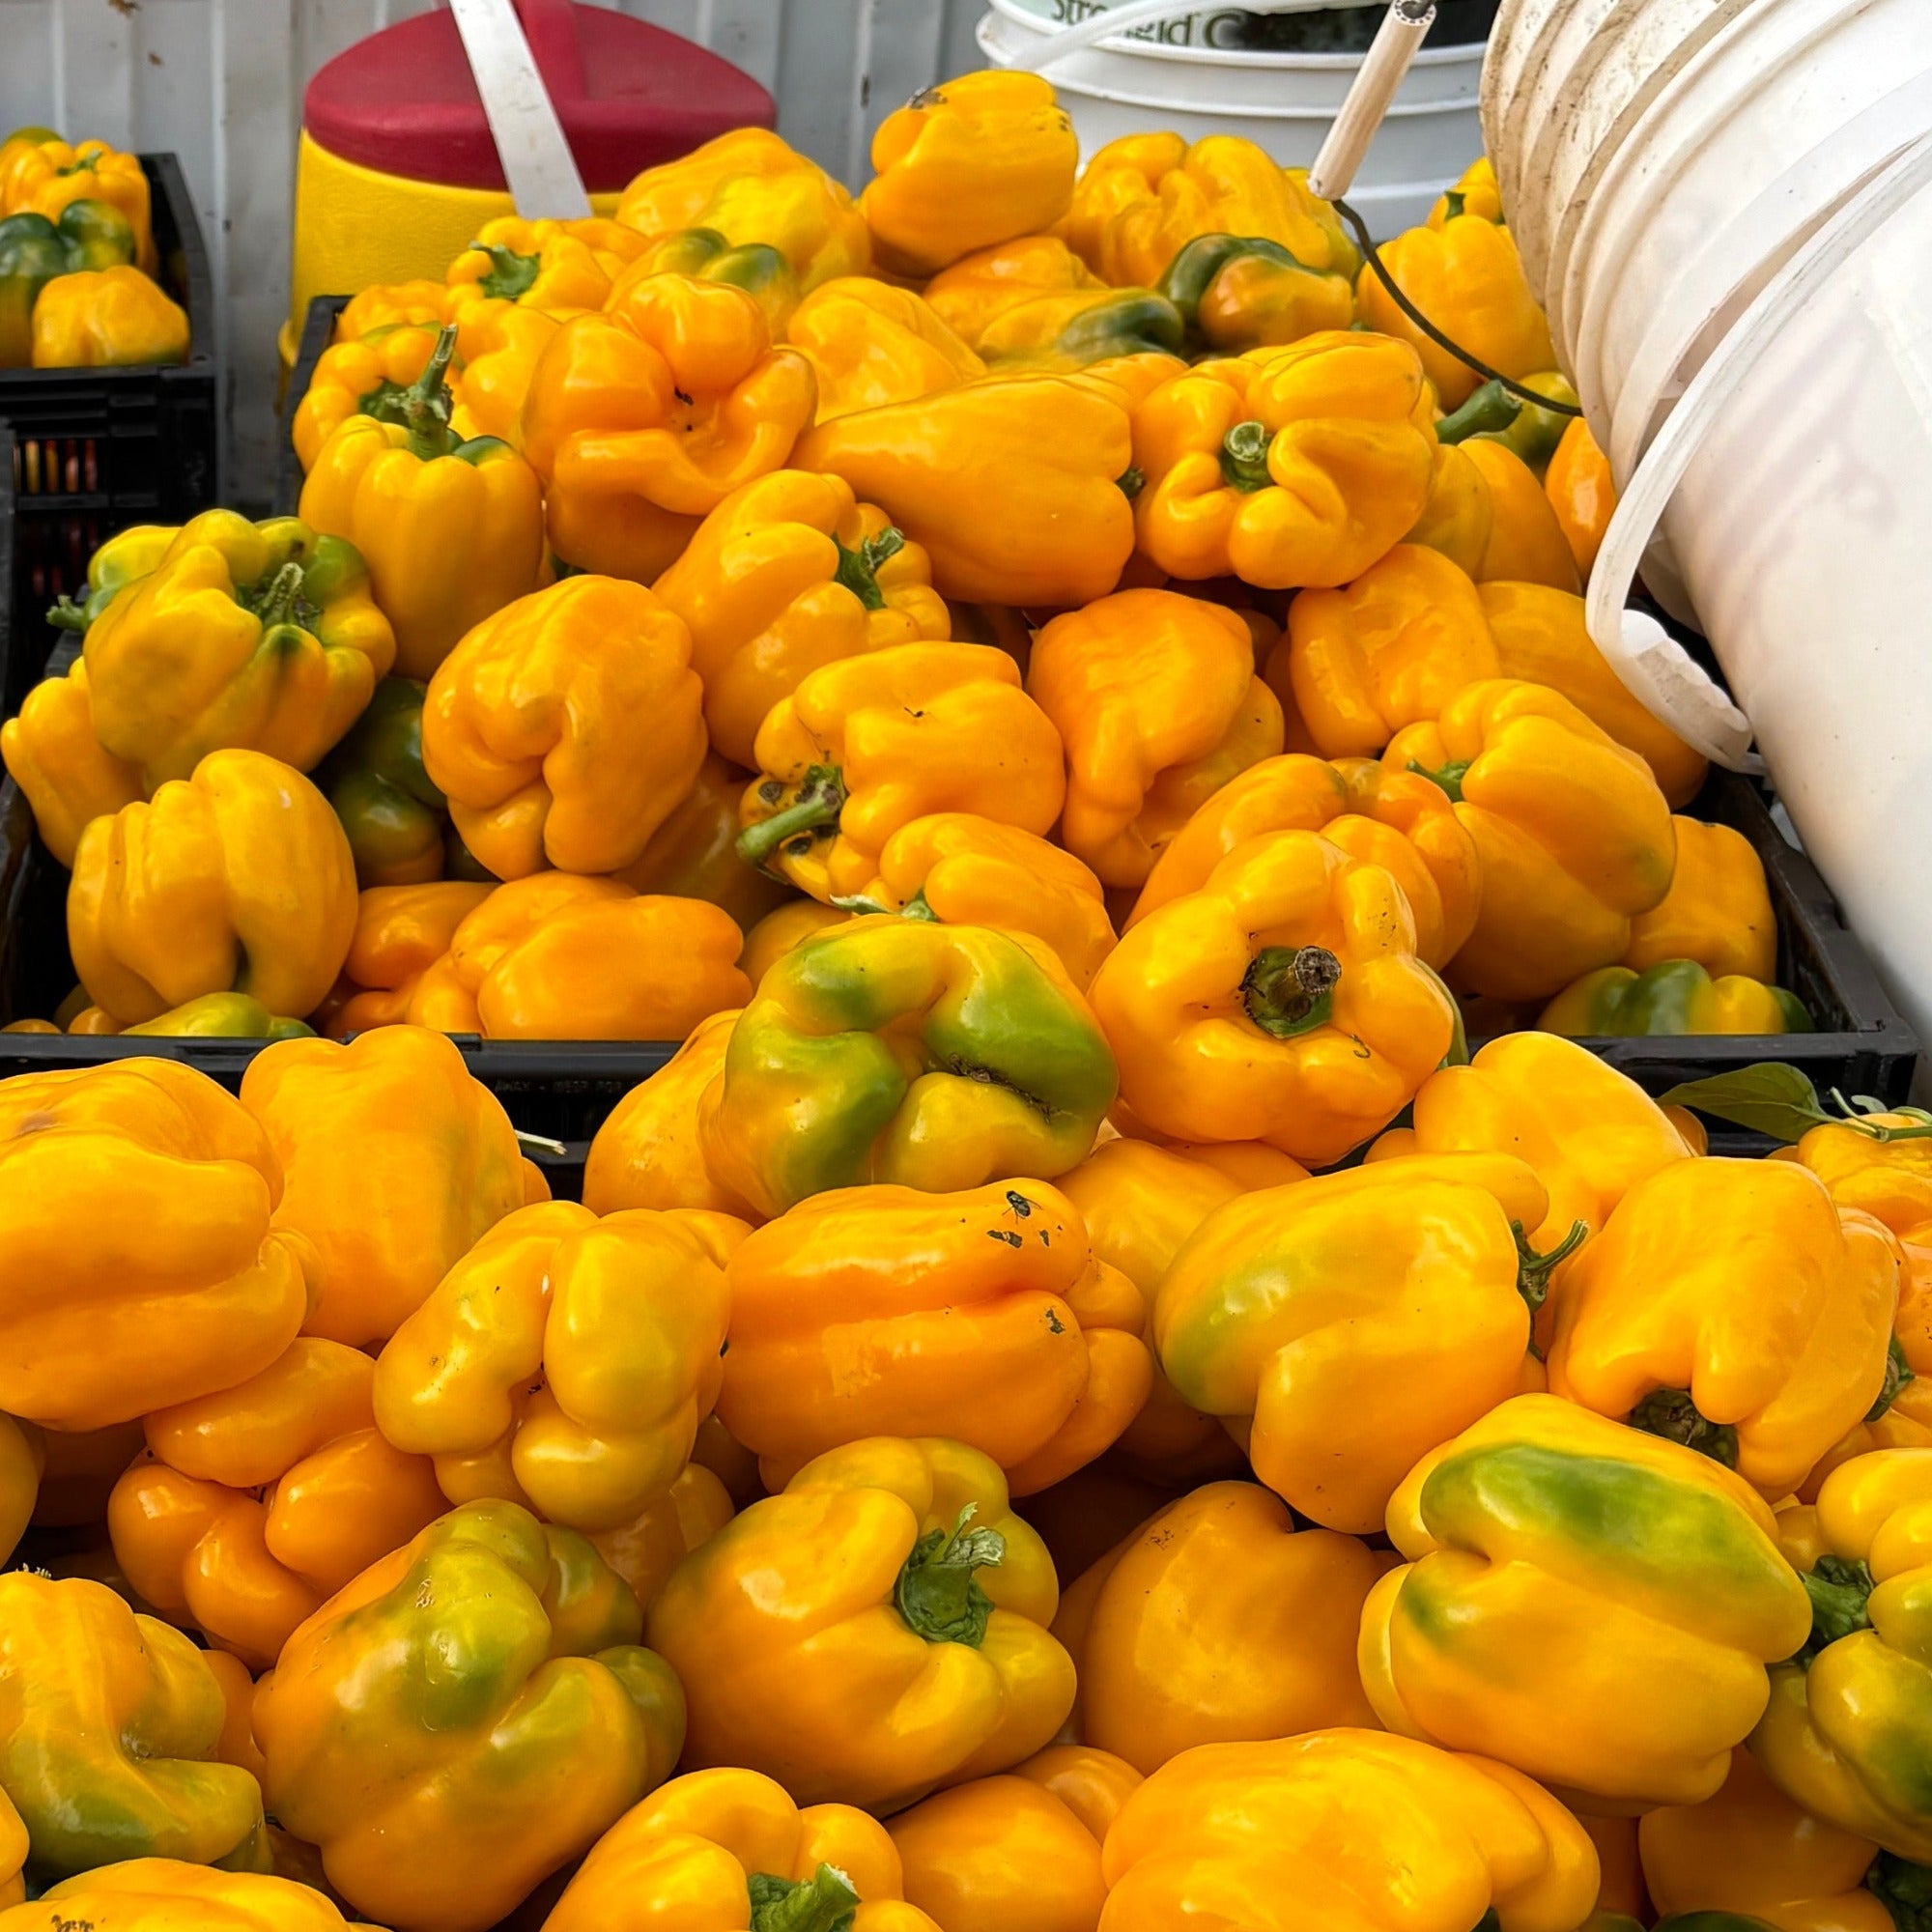 Crates of quadrato asti giallo yellow bell peppers